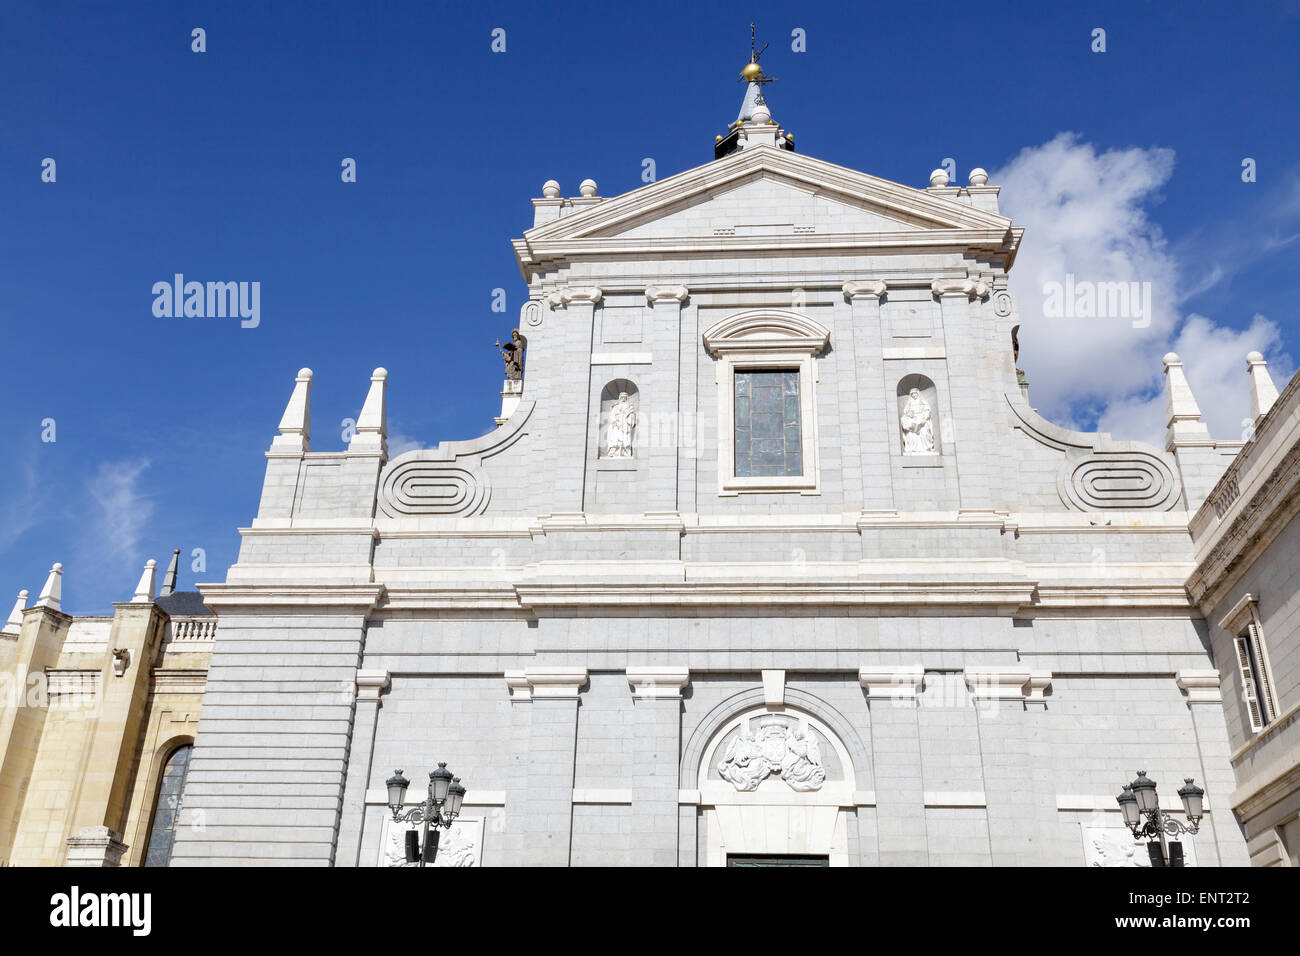 Santa Maria la Real de la cathédrale de l'Almudena, Madrid, Espagne Banque D'Images